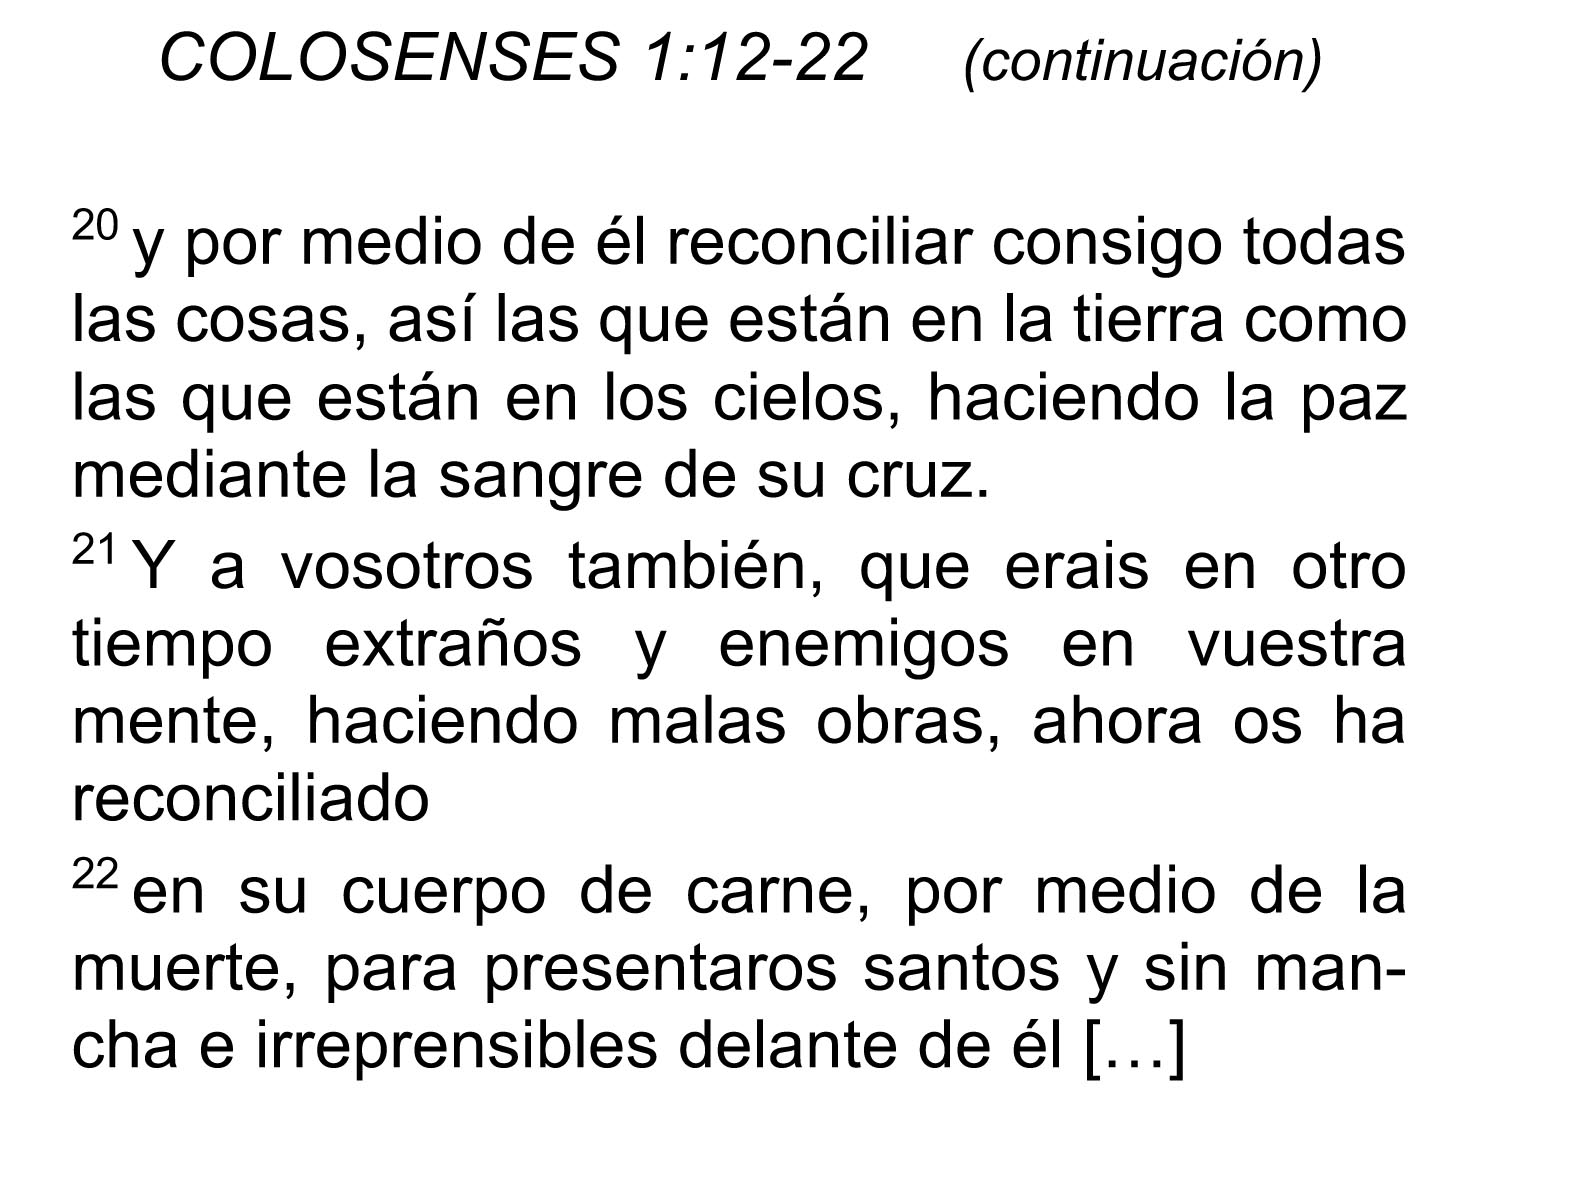 Colosenses 1:20-22